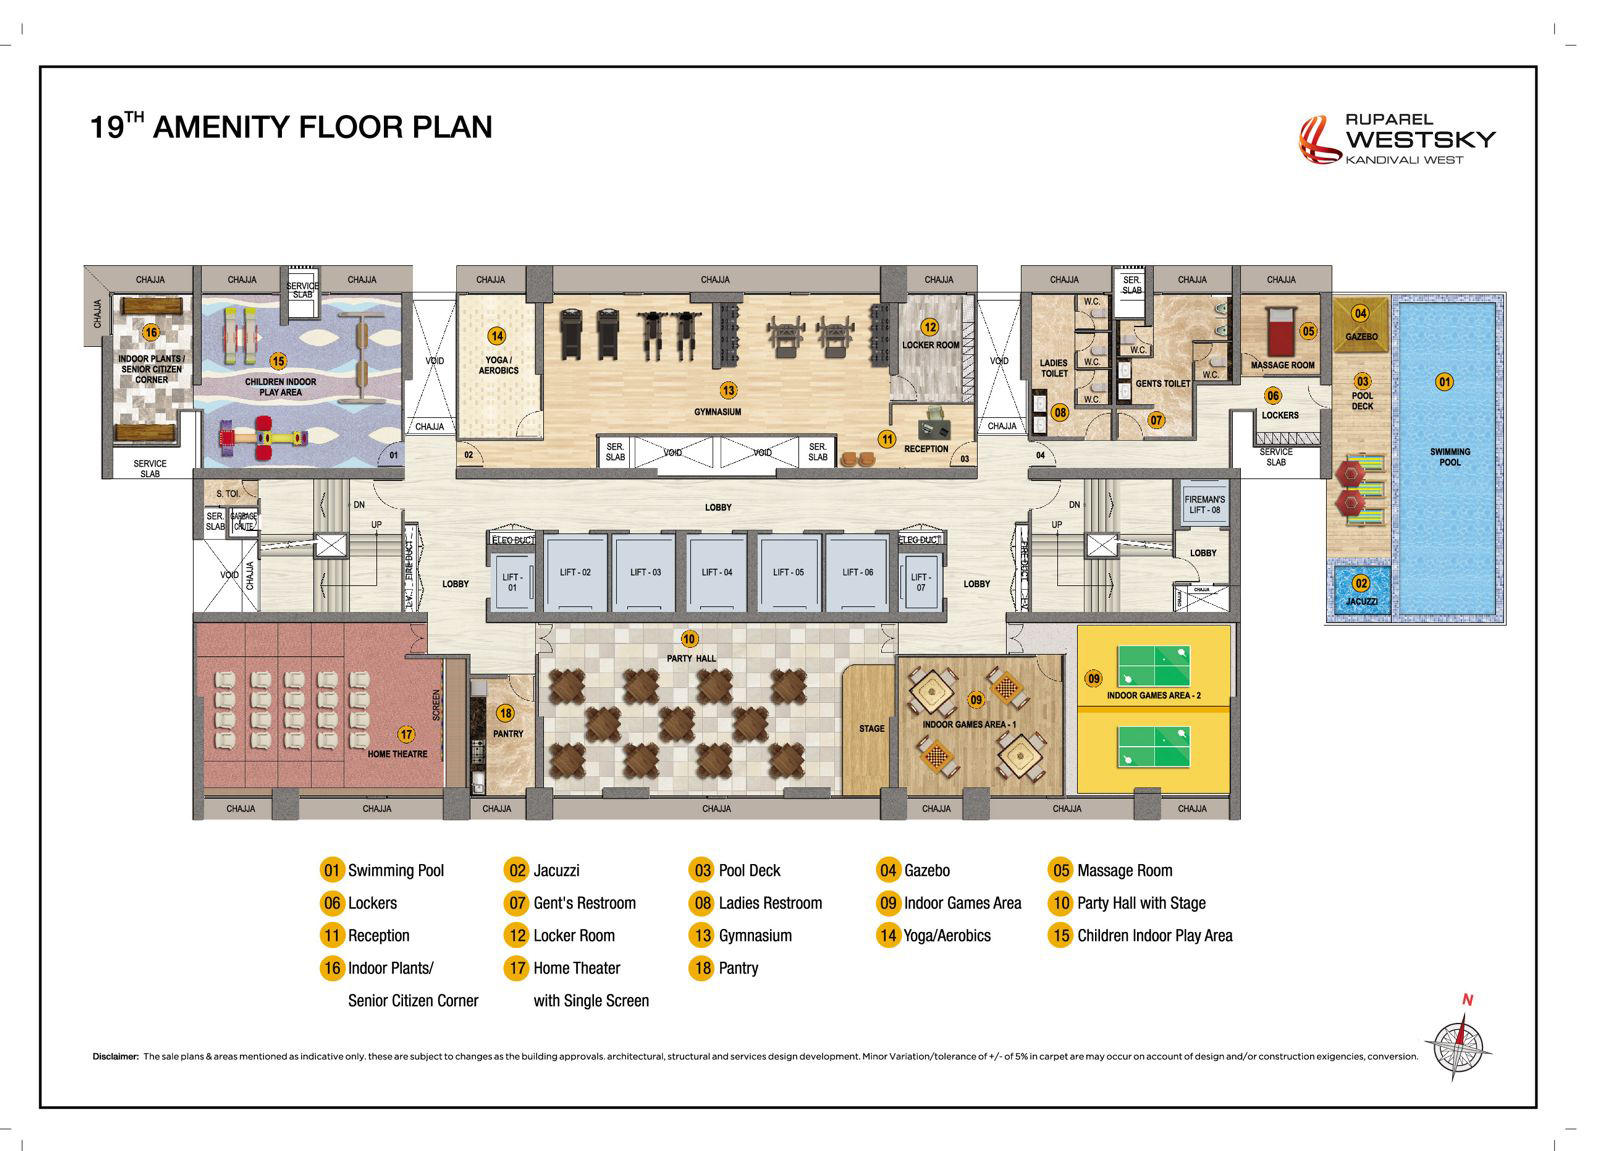 Amenity Floor Plan, 19th